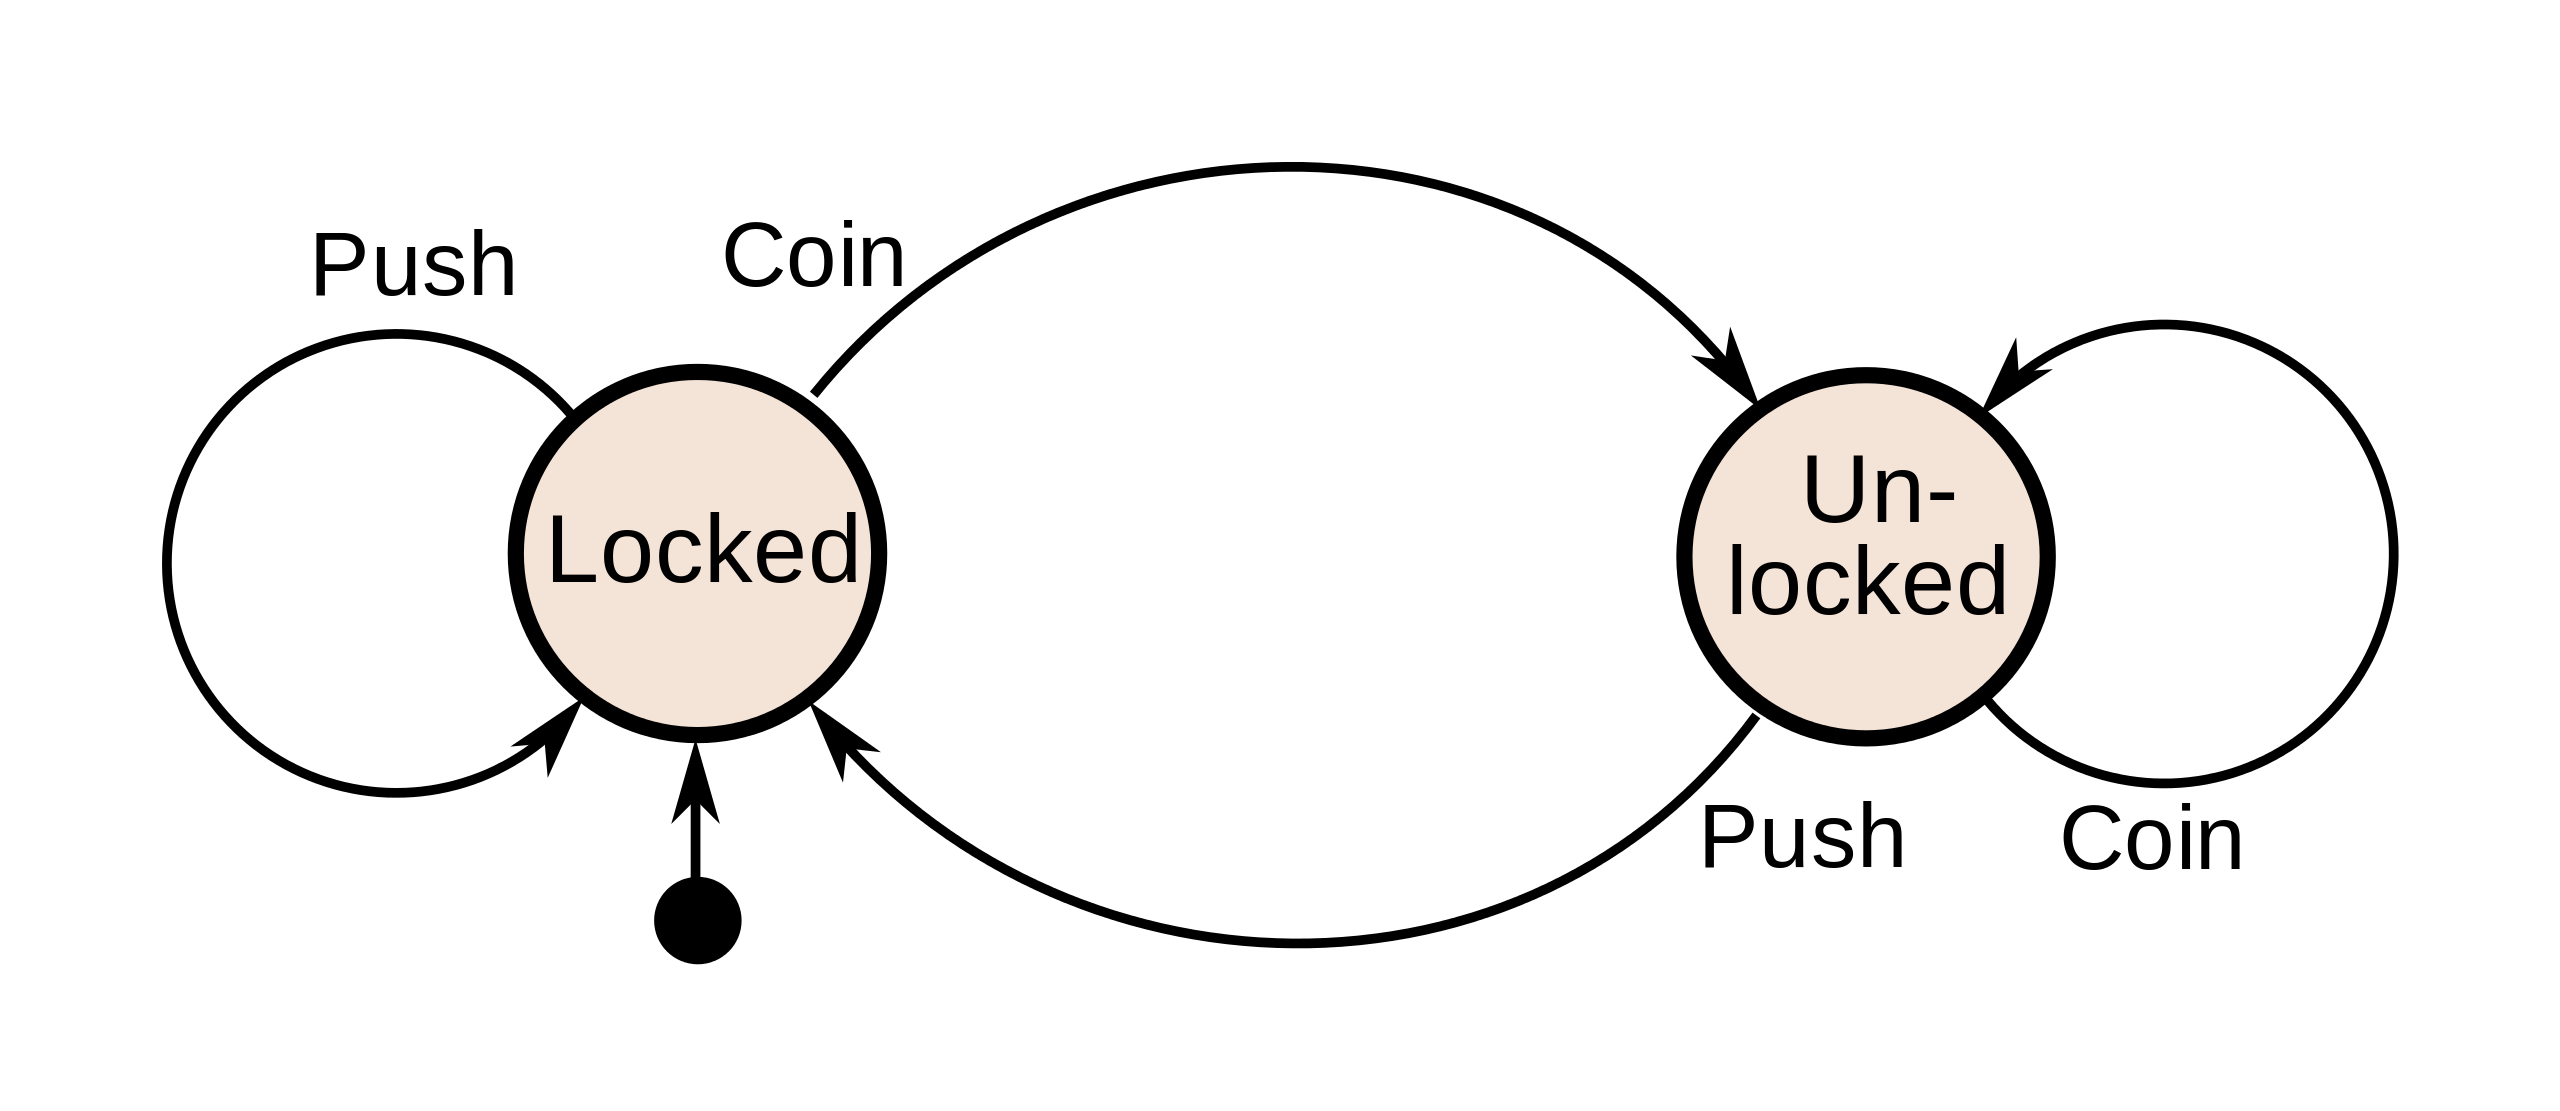 State diagram representing the turnstile example